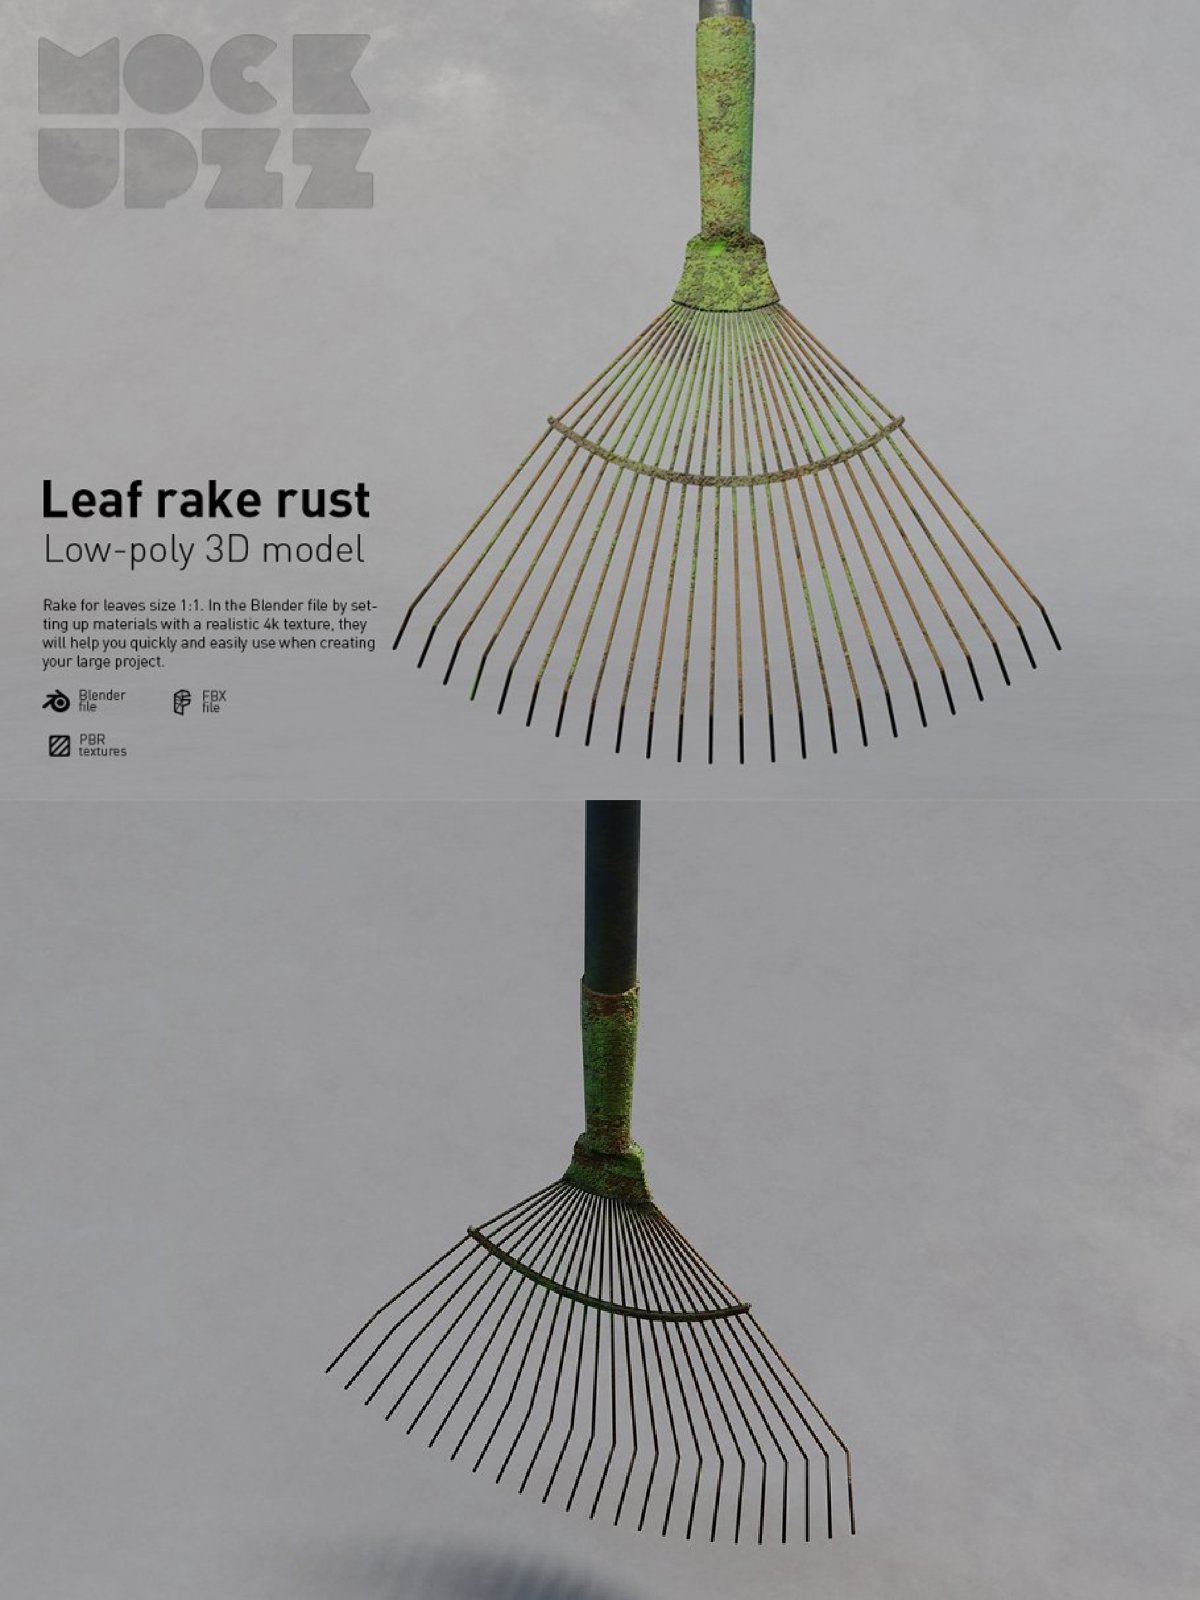 Leaf rake rust pinterest image preview.